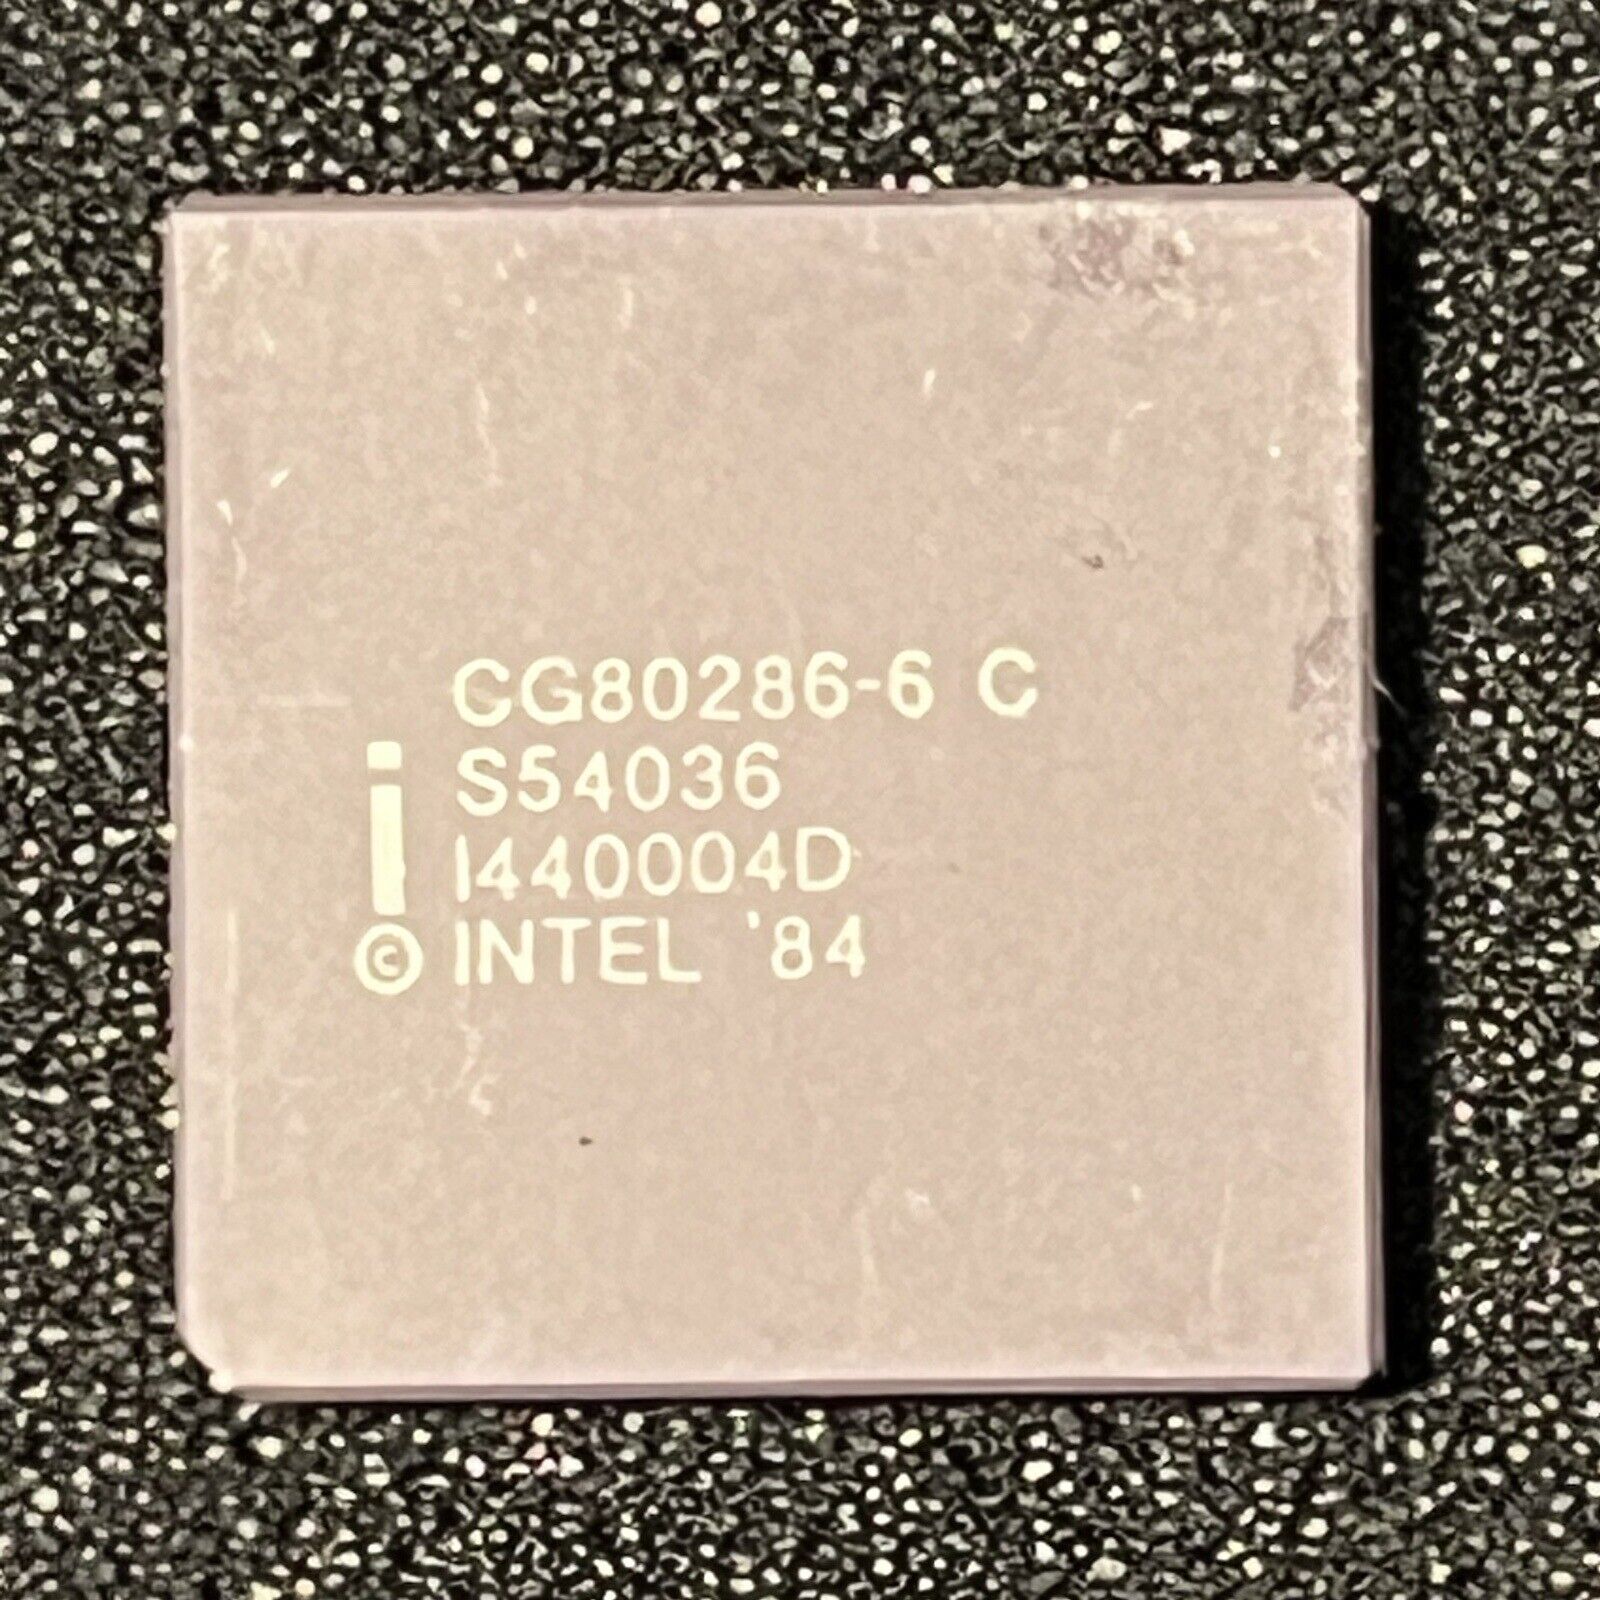 Rare Vintage I44k Fabrication Intel CG80286-6C 80286 CPU